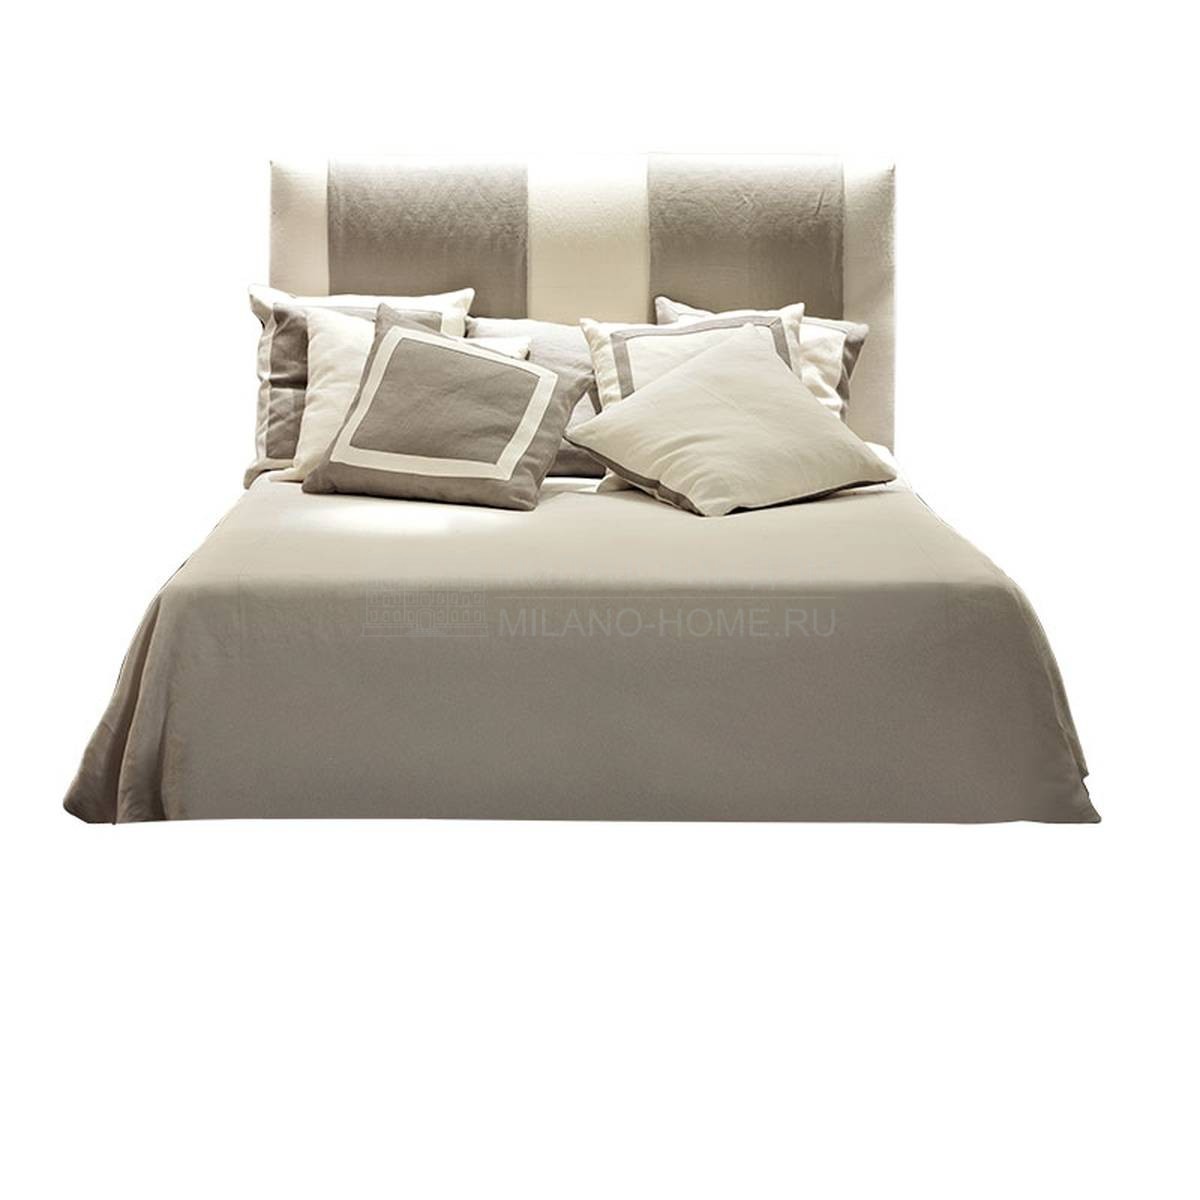 Кровать с мягким изголовьем Terrad'ombra/ bed из Италии фабрики SOFTHOUSE